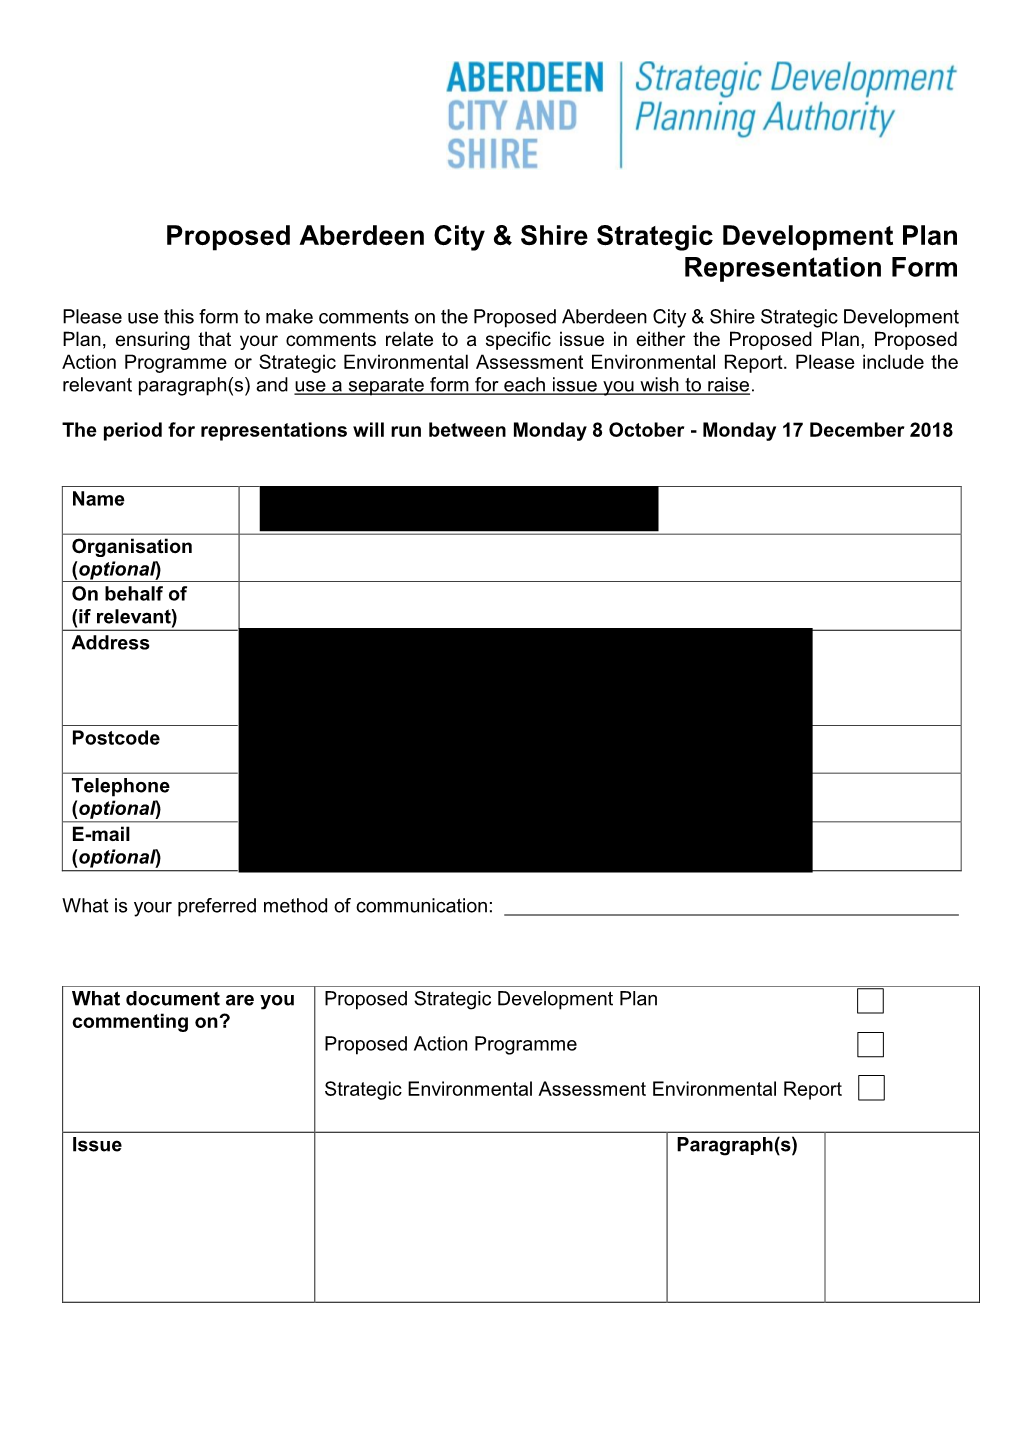 Proposed Aberdeen City & Shire Strategic Development Plan